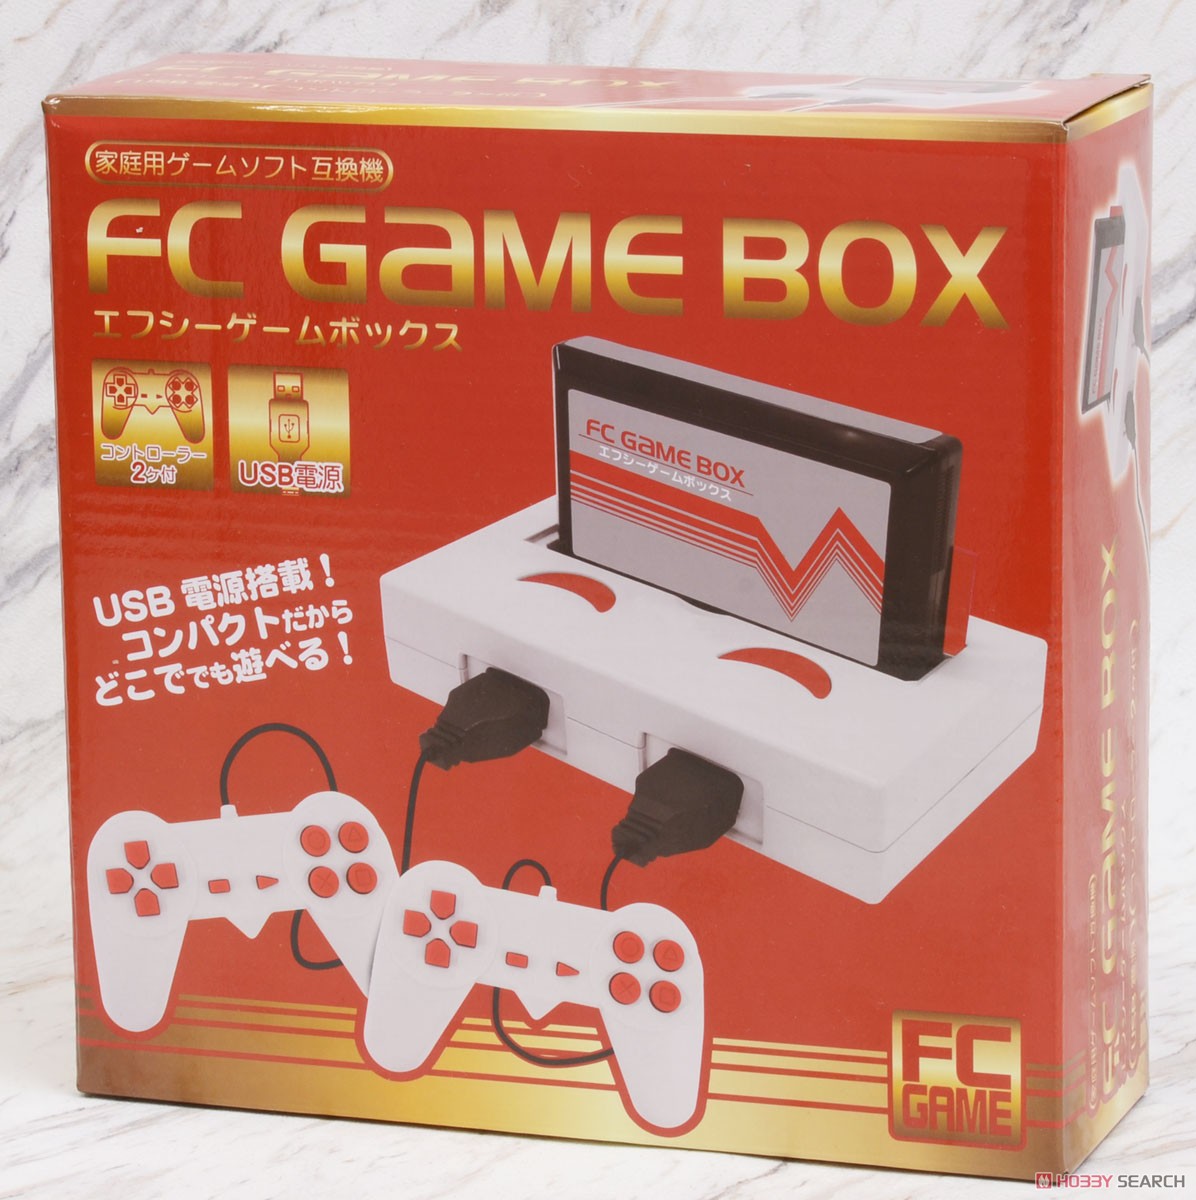 FC GAME BOX III (TVゲーム) パッケージ1